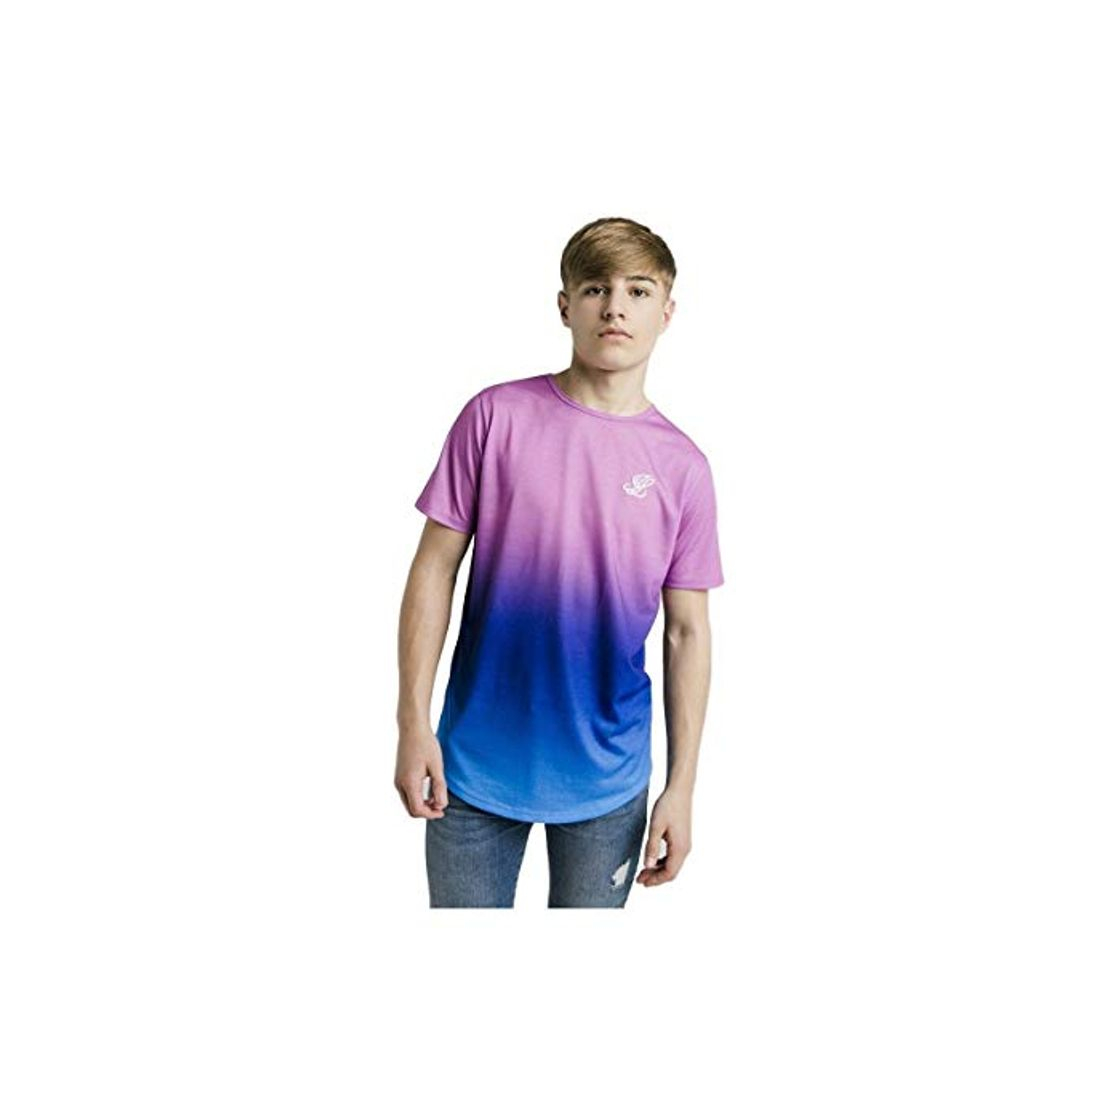 Illusive London Camiseta Niño Fade Rosa y Azul